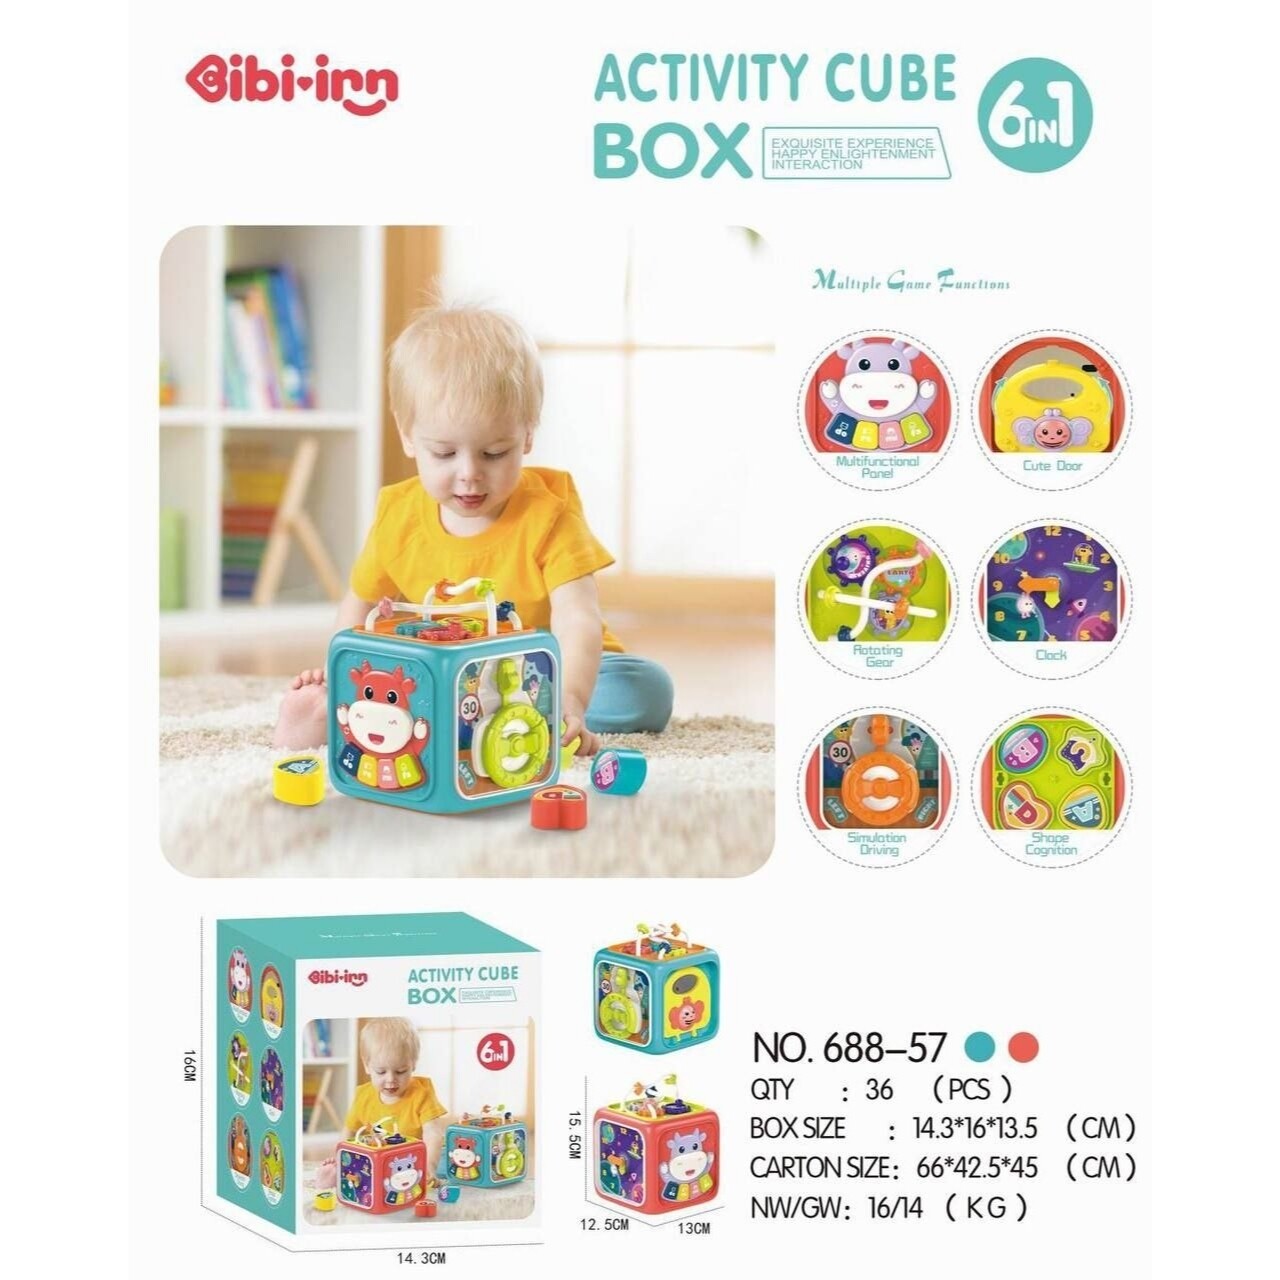 Музыкальная игрушка сортер для малышей монтессори, бизиборд, Бокс для сортировки Кубика активности "Activity Cube Box / NO.688-57" 6in1